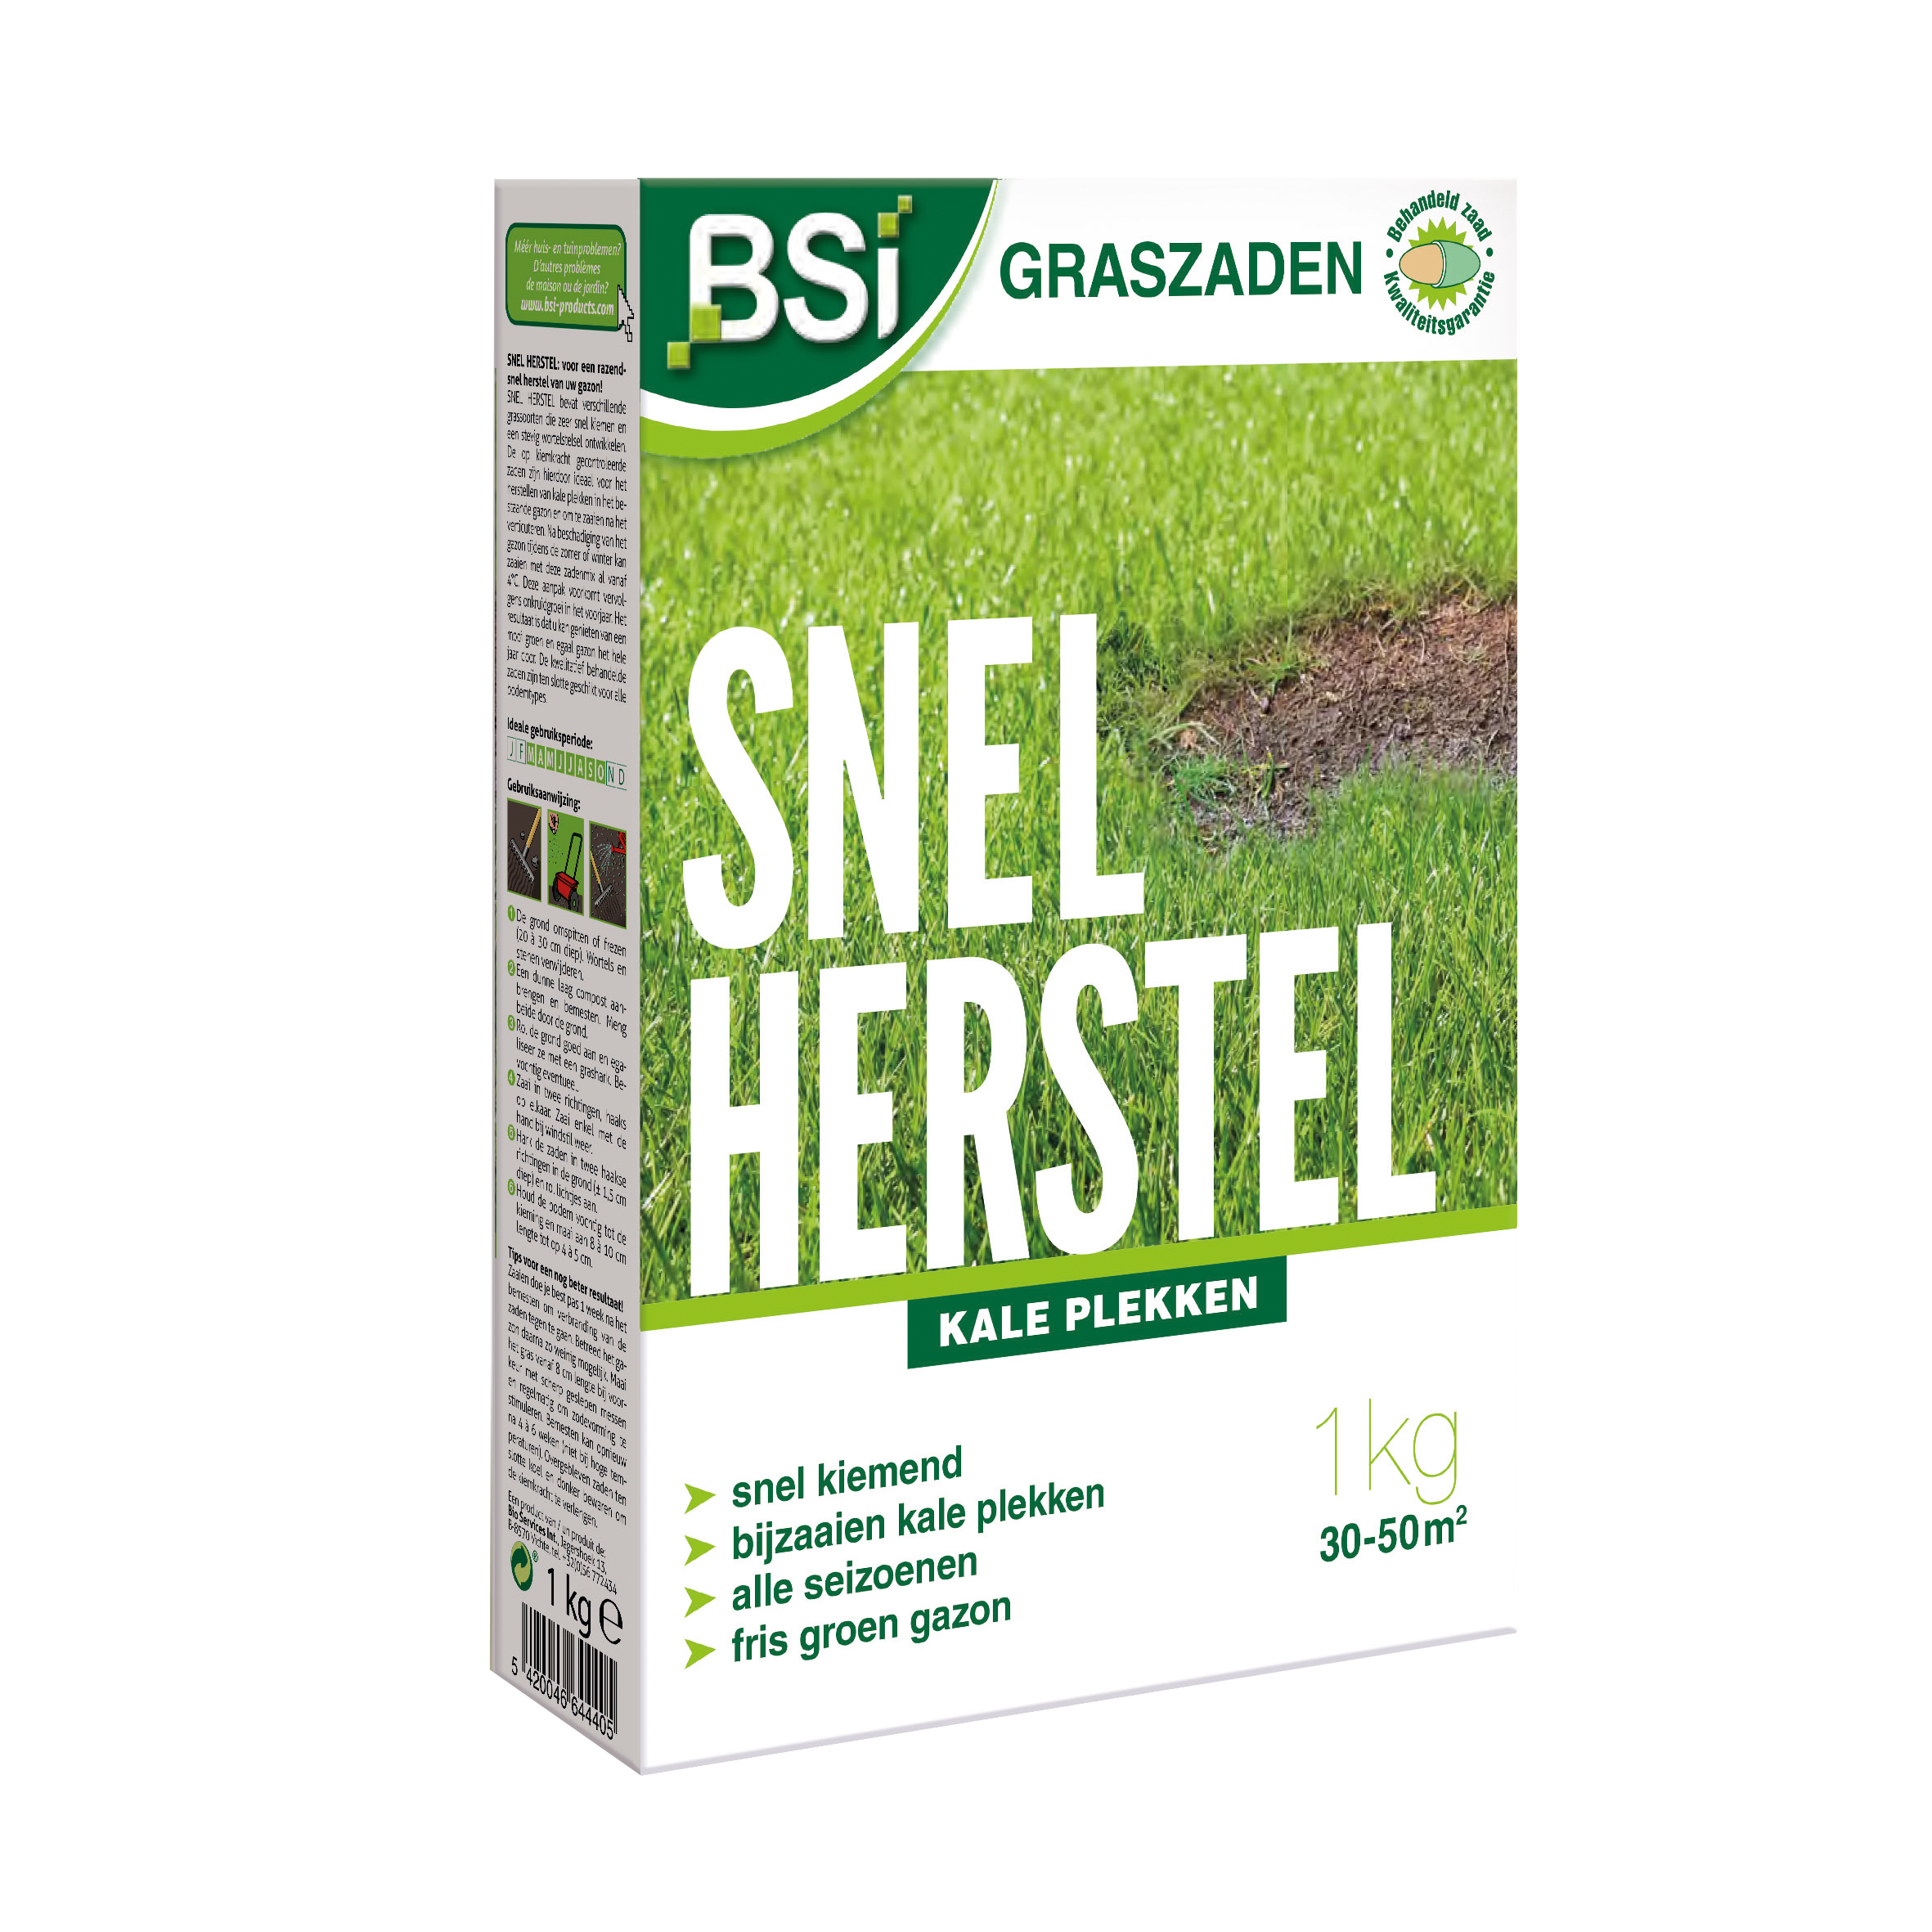 BSI Graszaad Herstel 1 kg image